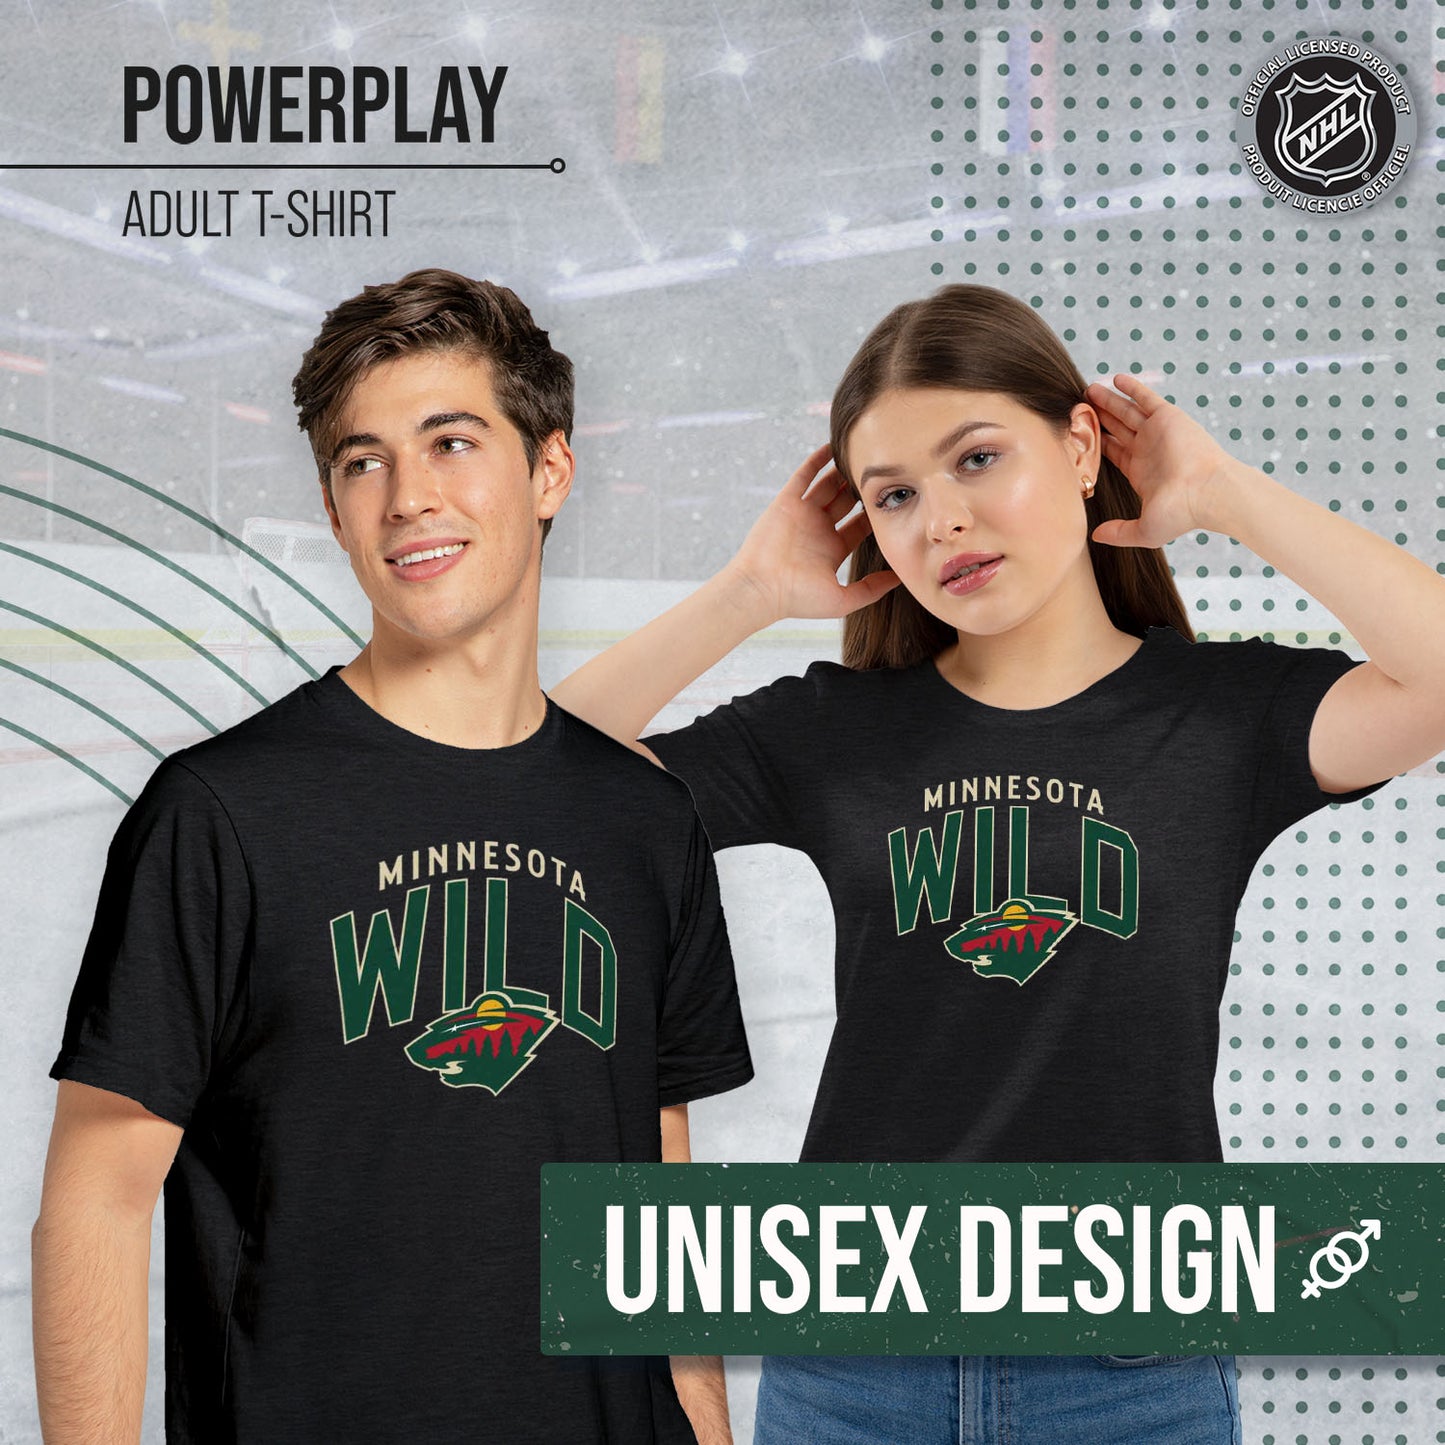 Minnesota Wild NHL Adult Powerplay Heathered Unisex T-Shirt - Black Heather